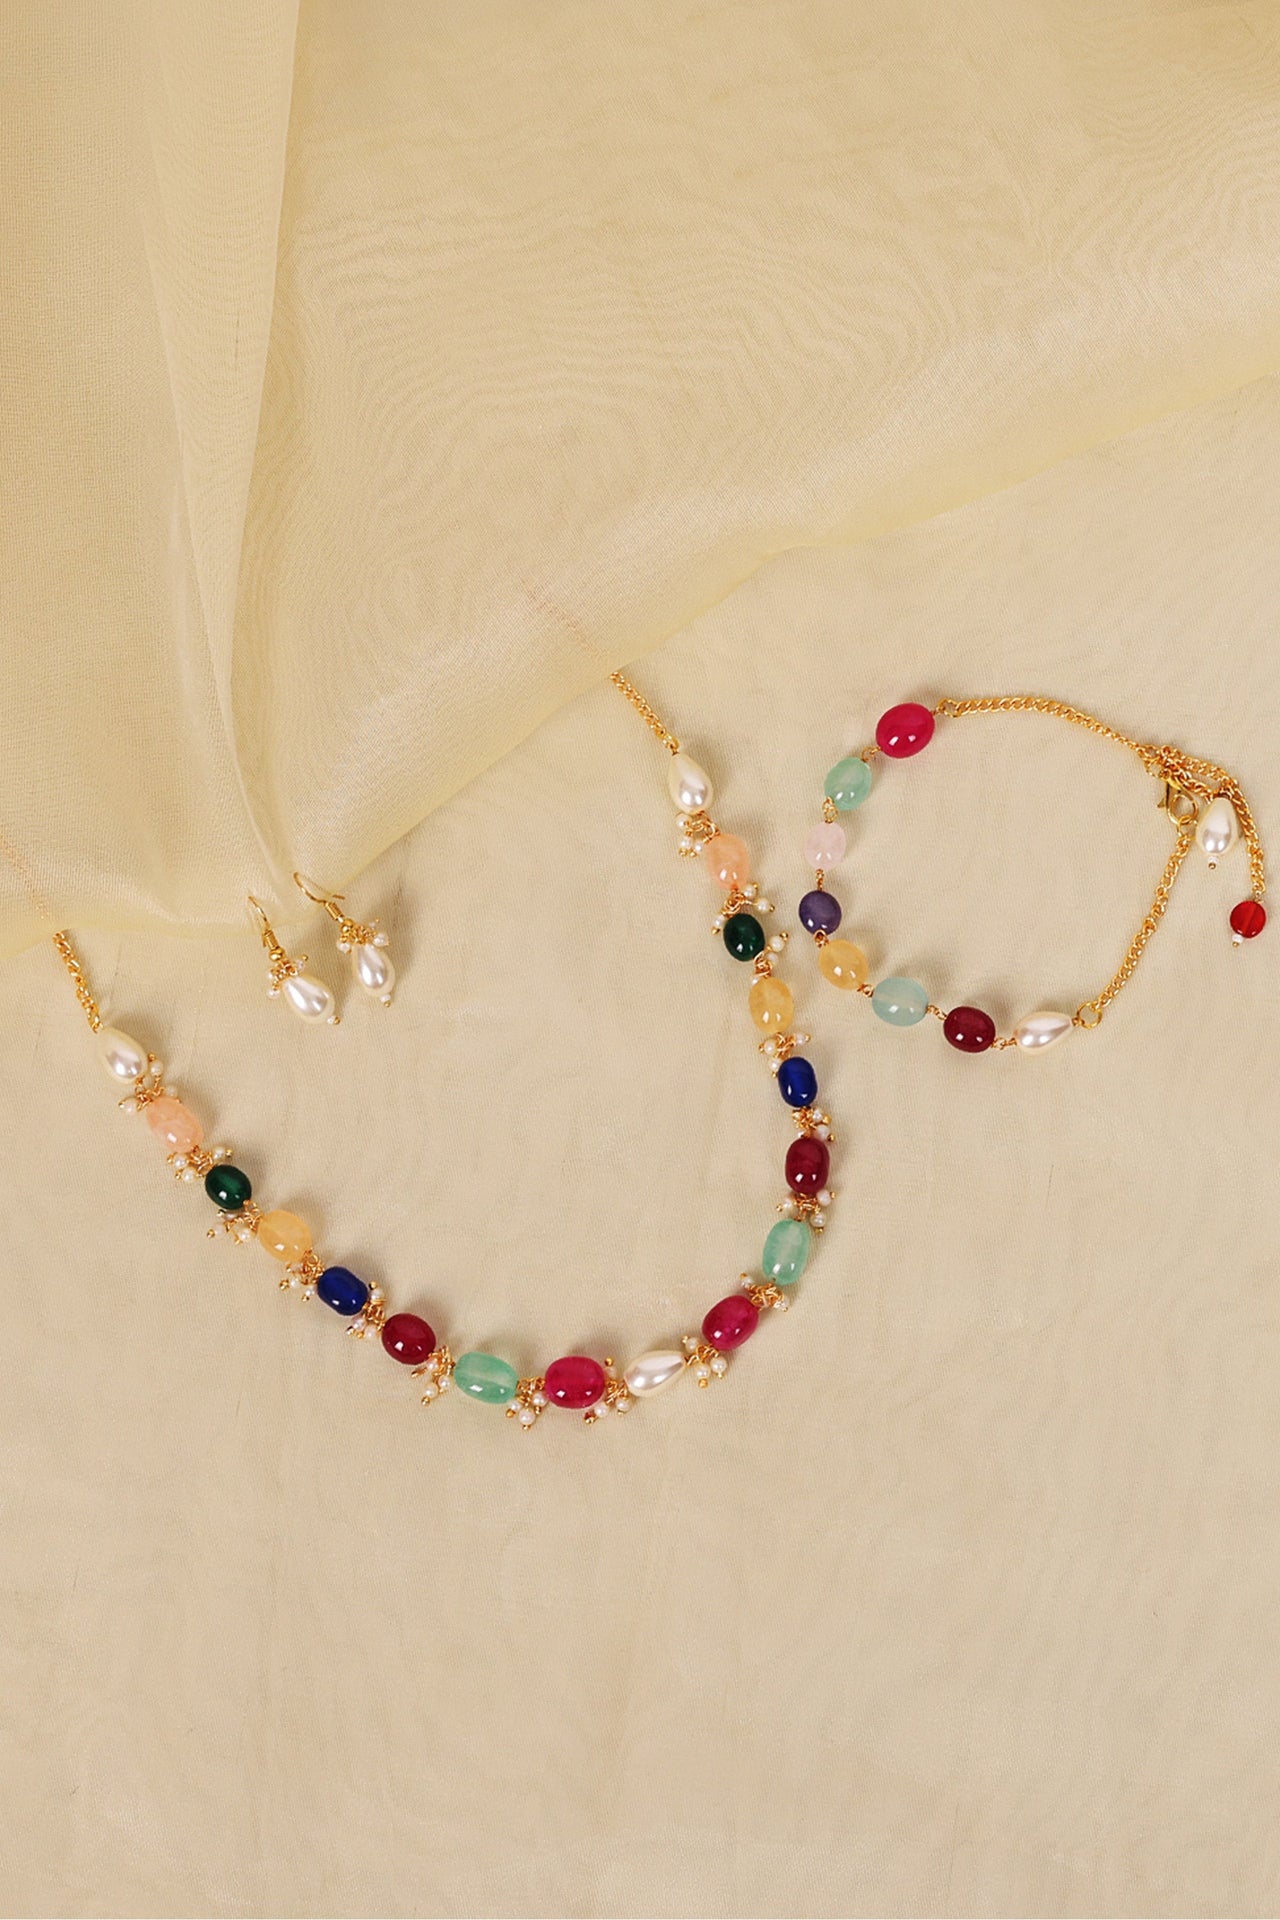 Multicolour Beads Necklace Earrings Bracelet Party Combo - Abdesignsjewellery